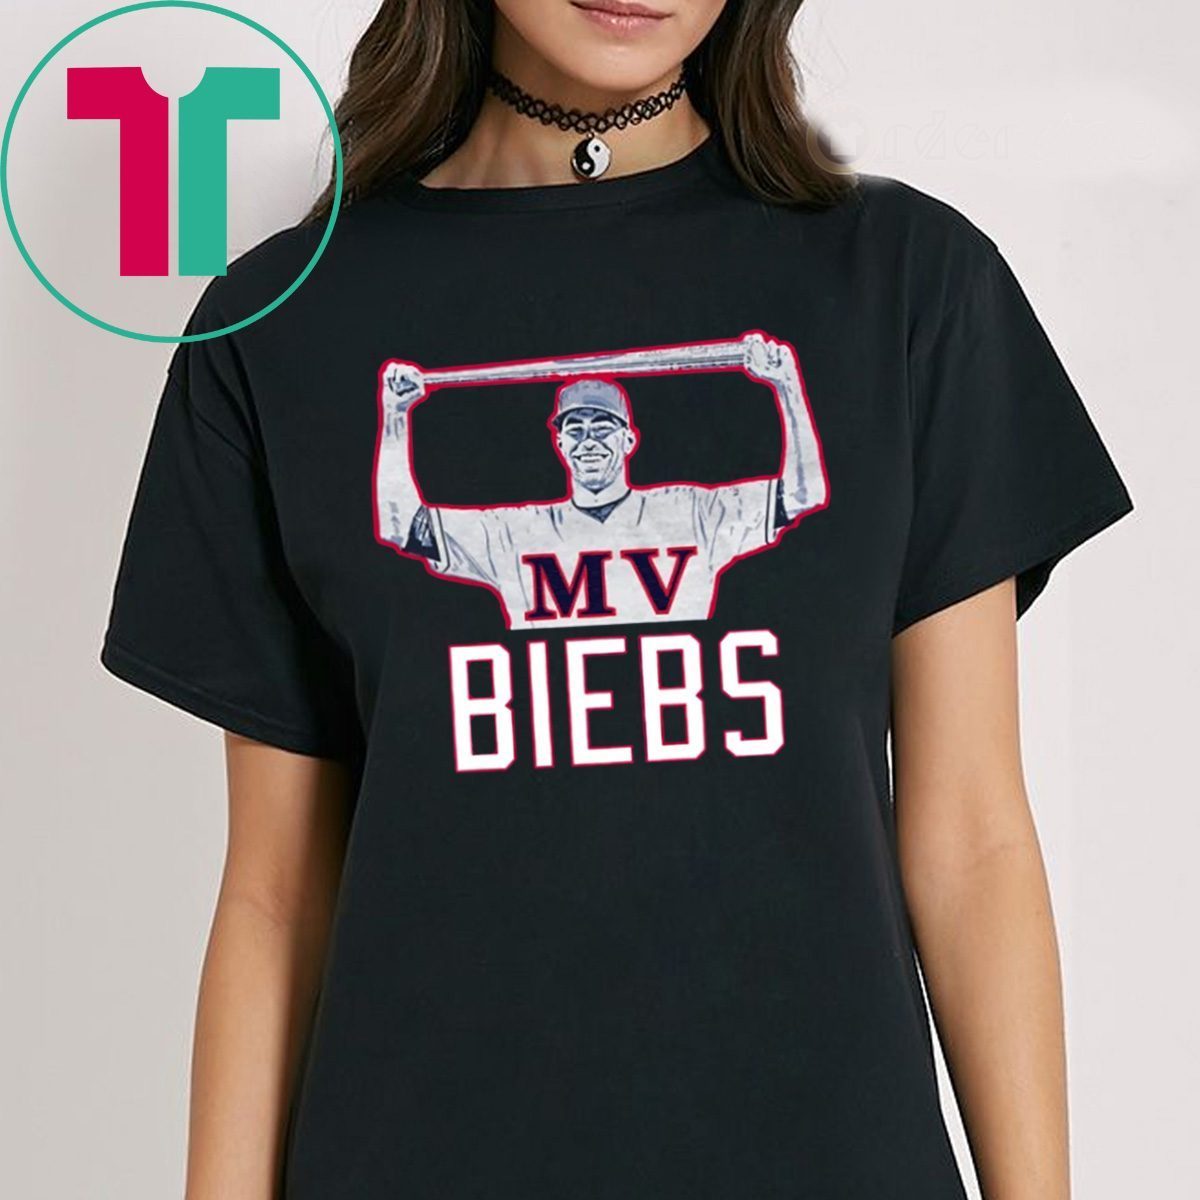 MV BIEBS T-Shirt - OrderQuilt.com